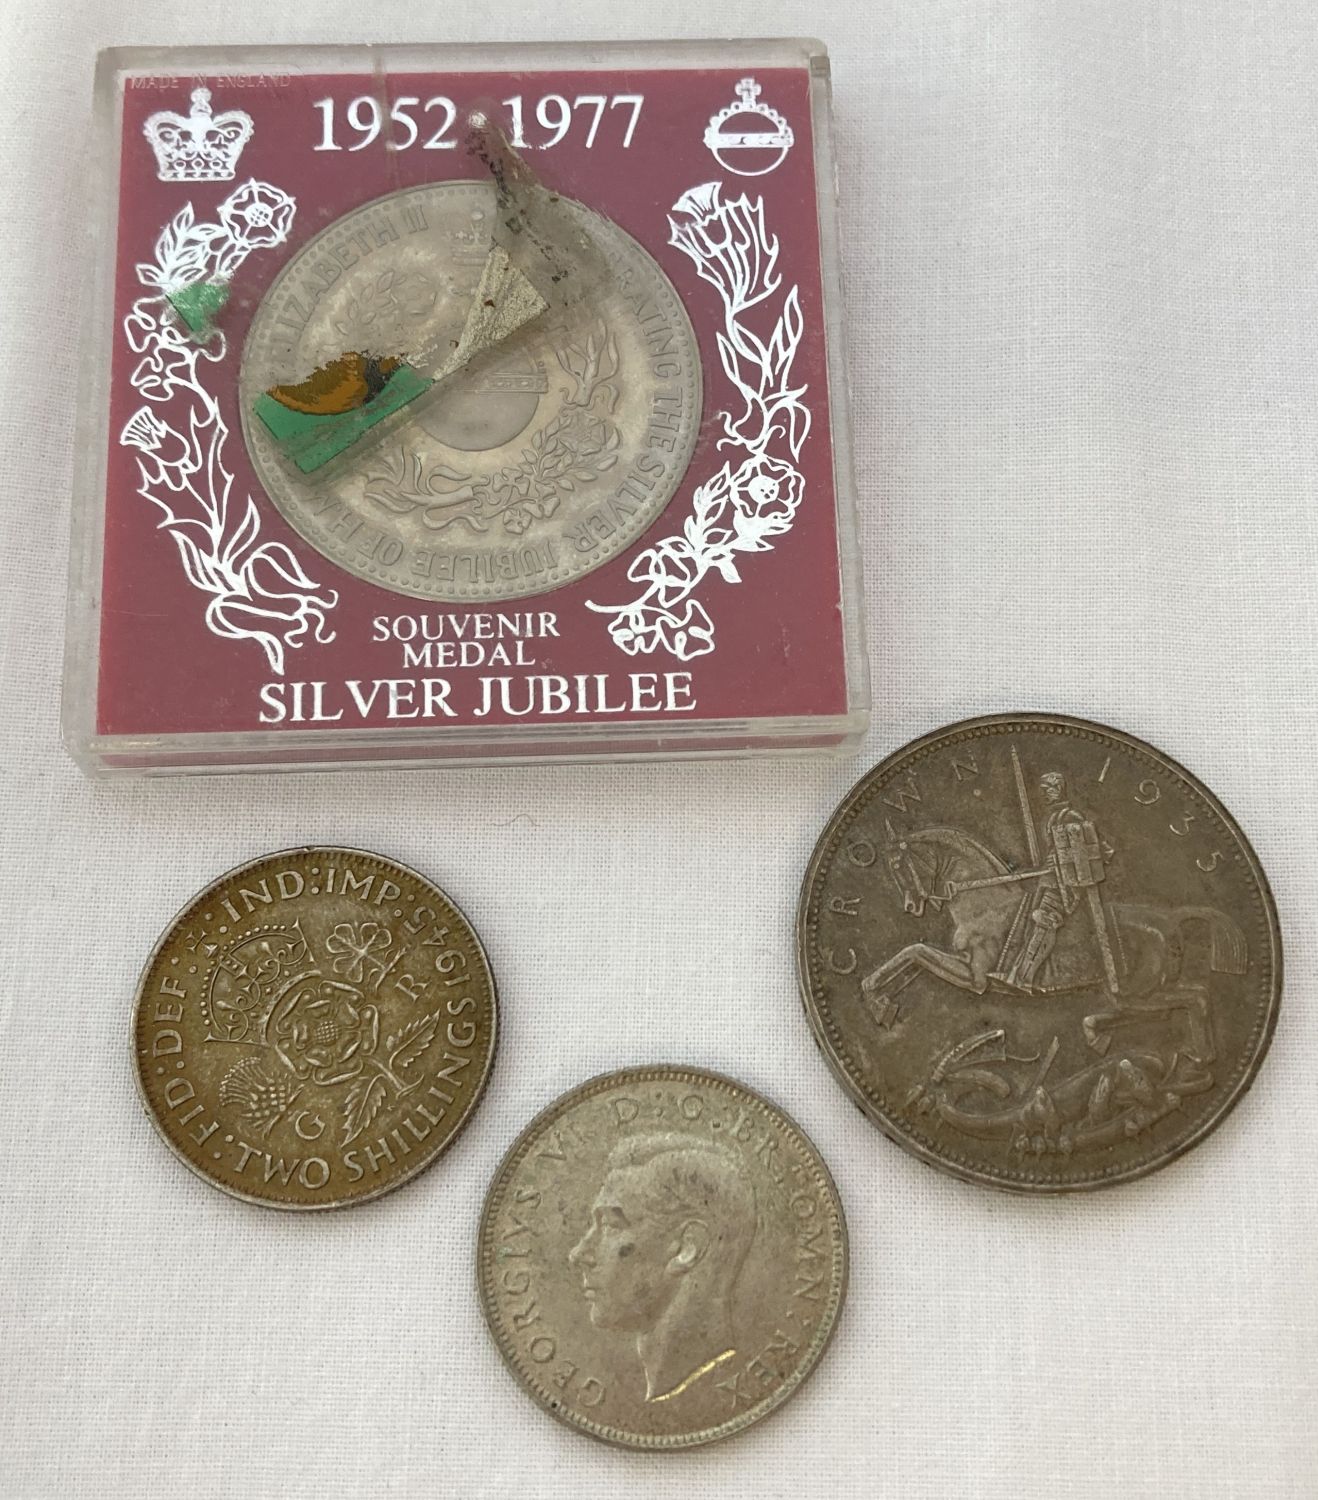 4 vintage coins. A 1935 "Rocking Horse" George V crown coin.